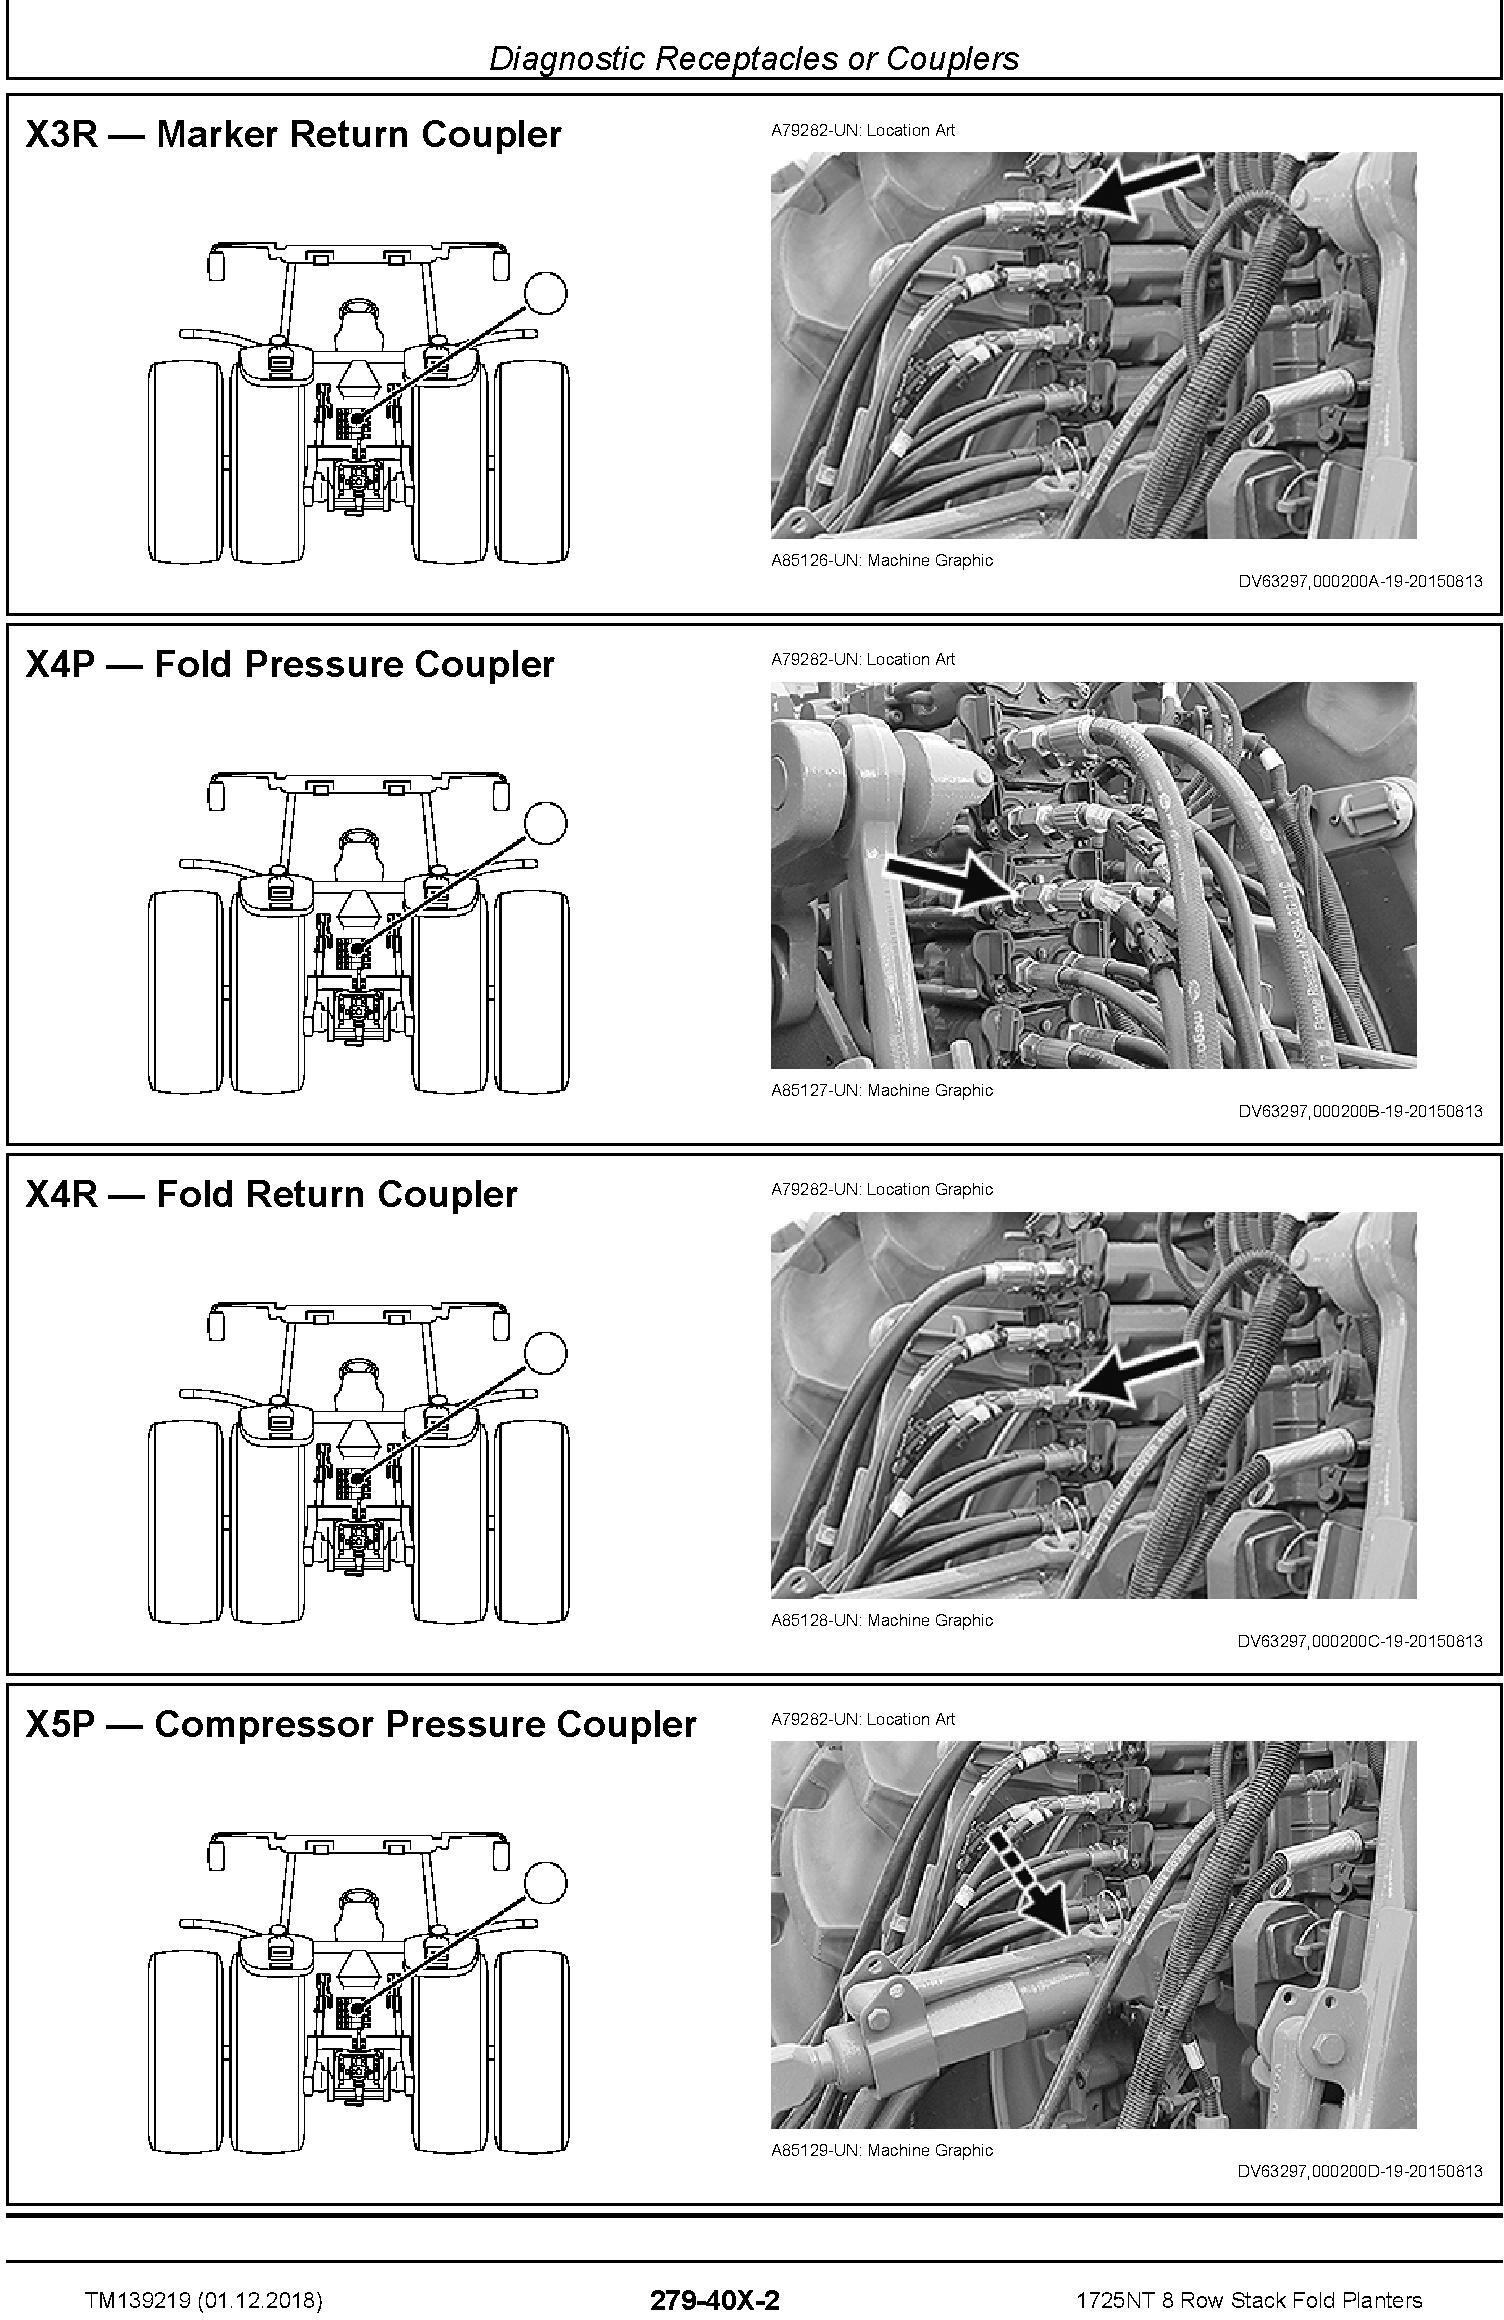 John Deere 1725NT 8 Row Stack Fold Planters Diagnostic Technical Service Manual (TM139219) - 3